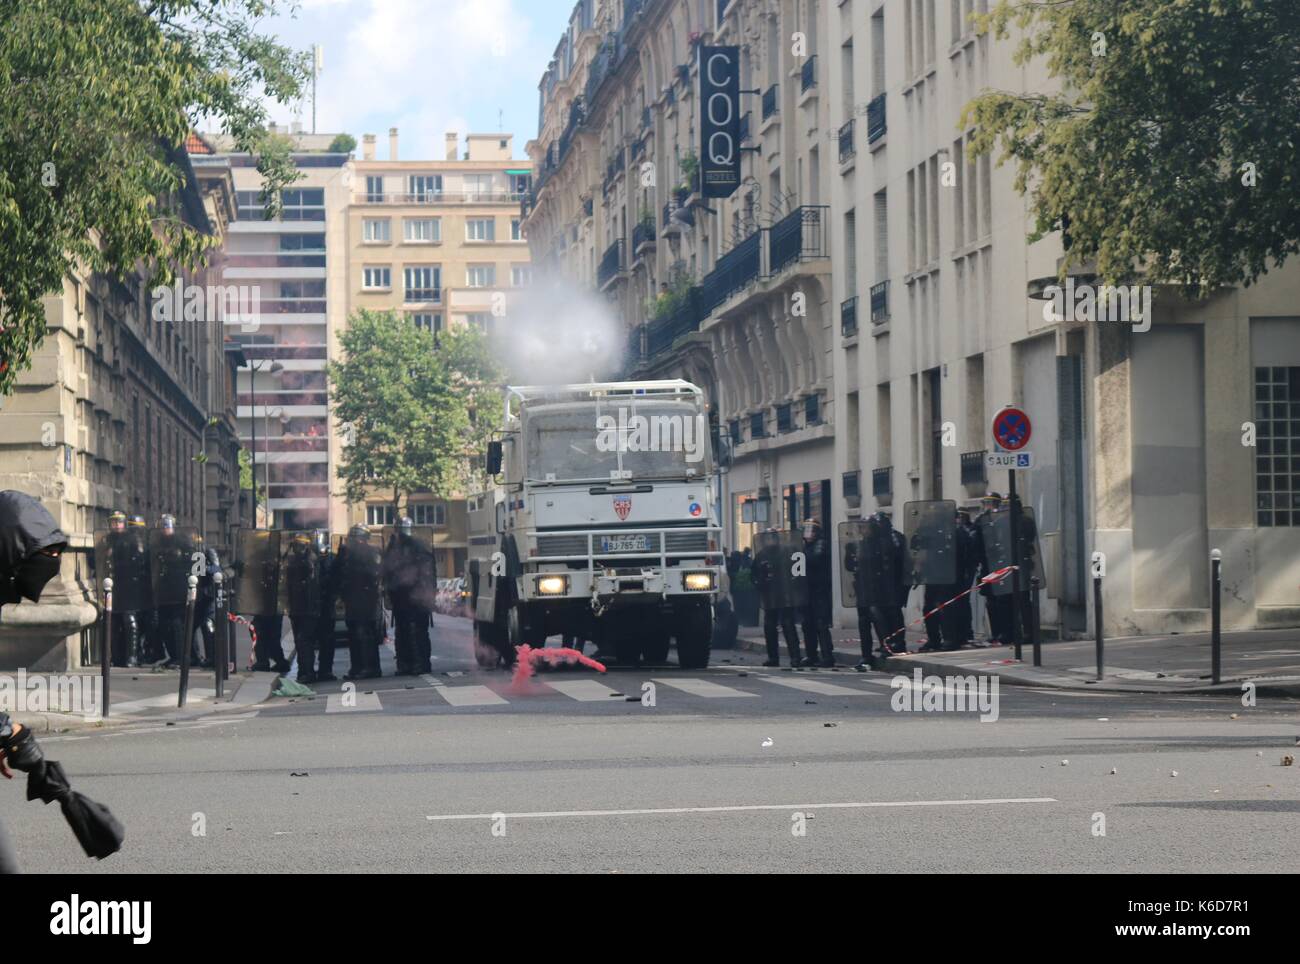 Parigi, Francia. Xii Sep, 2017. cannone ad acqua viene distribuito dopo scontri a Parigi credito: conall kearney/alamy live news Foto Stock